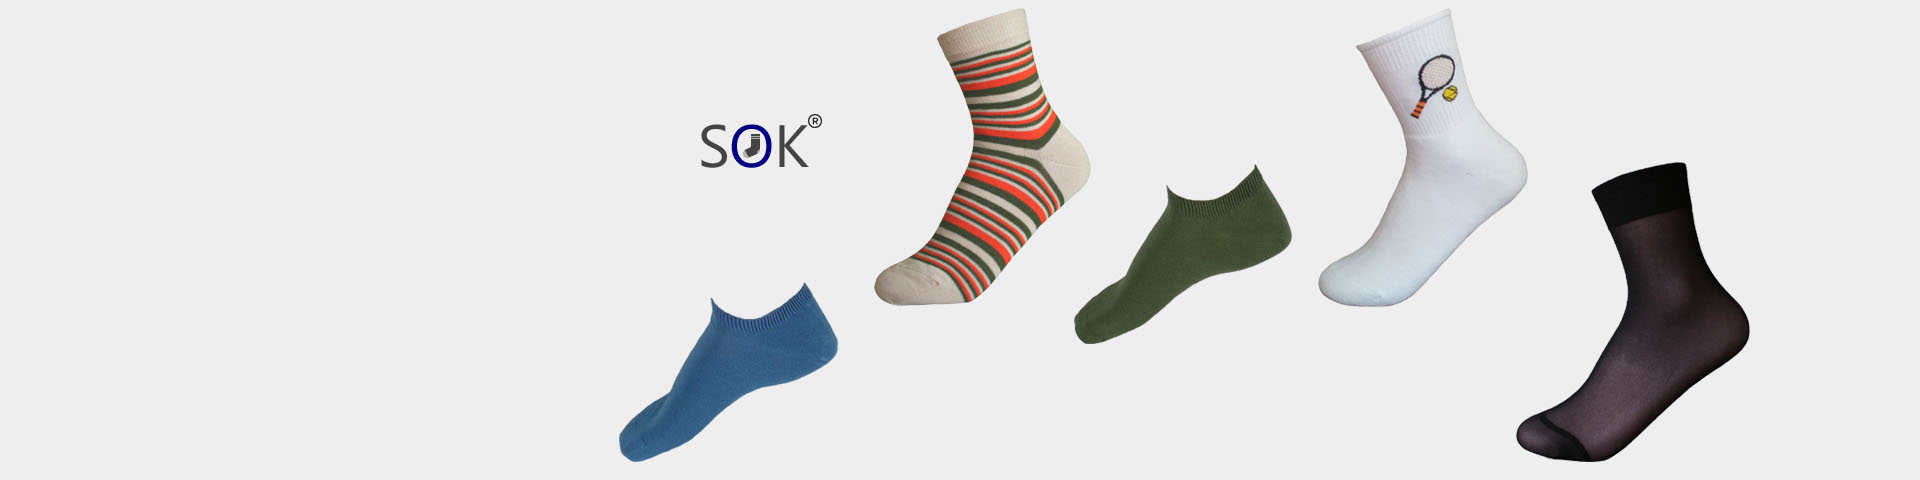 SOK socks and more